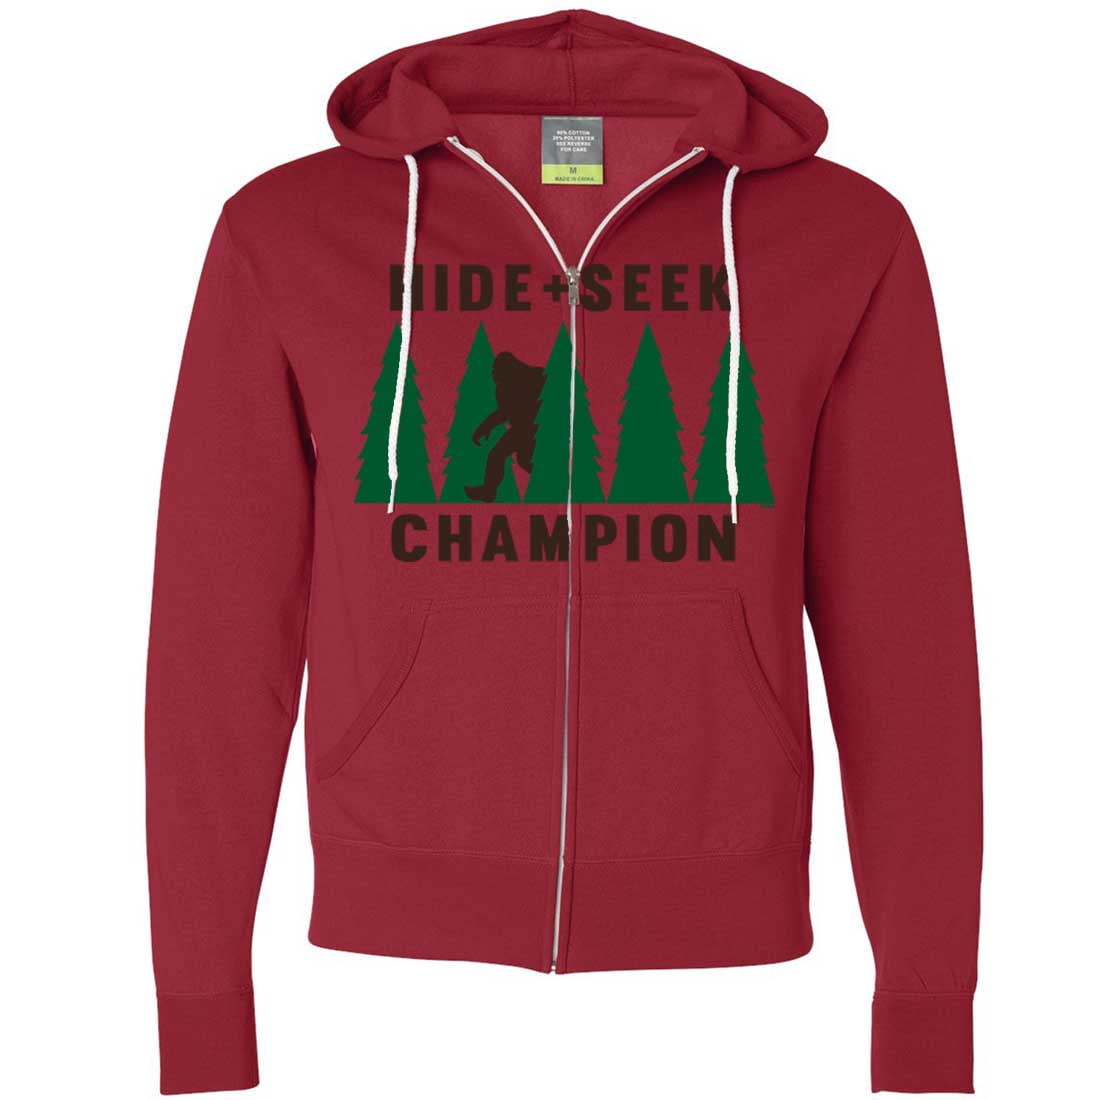 red champion zip up